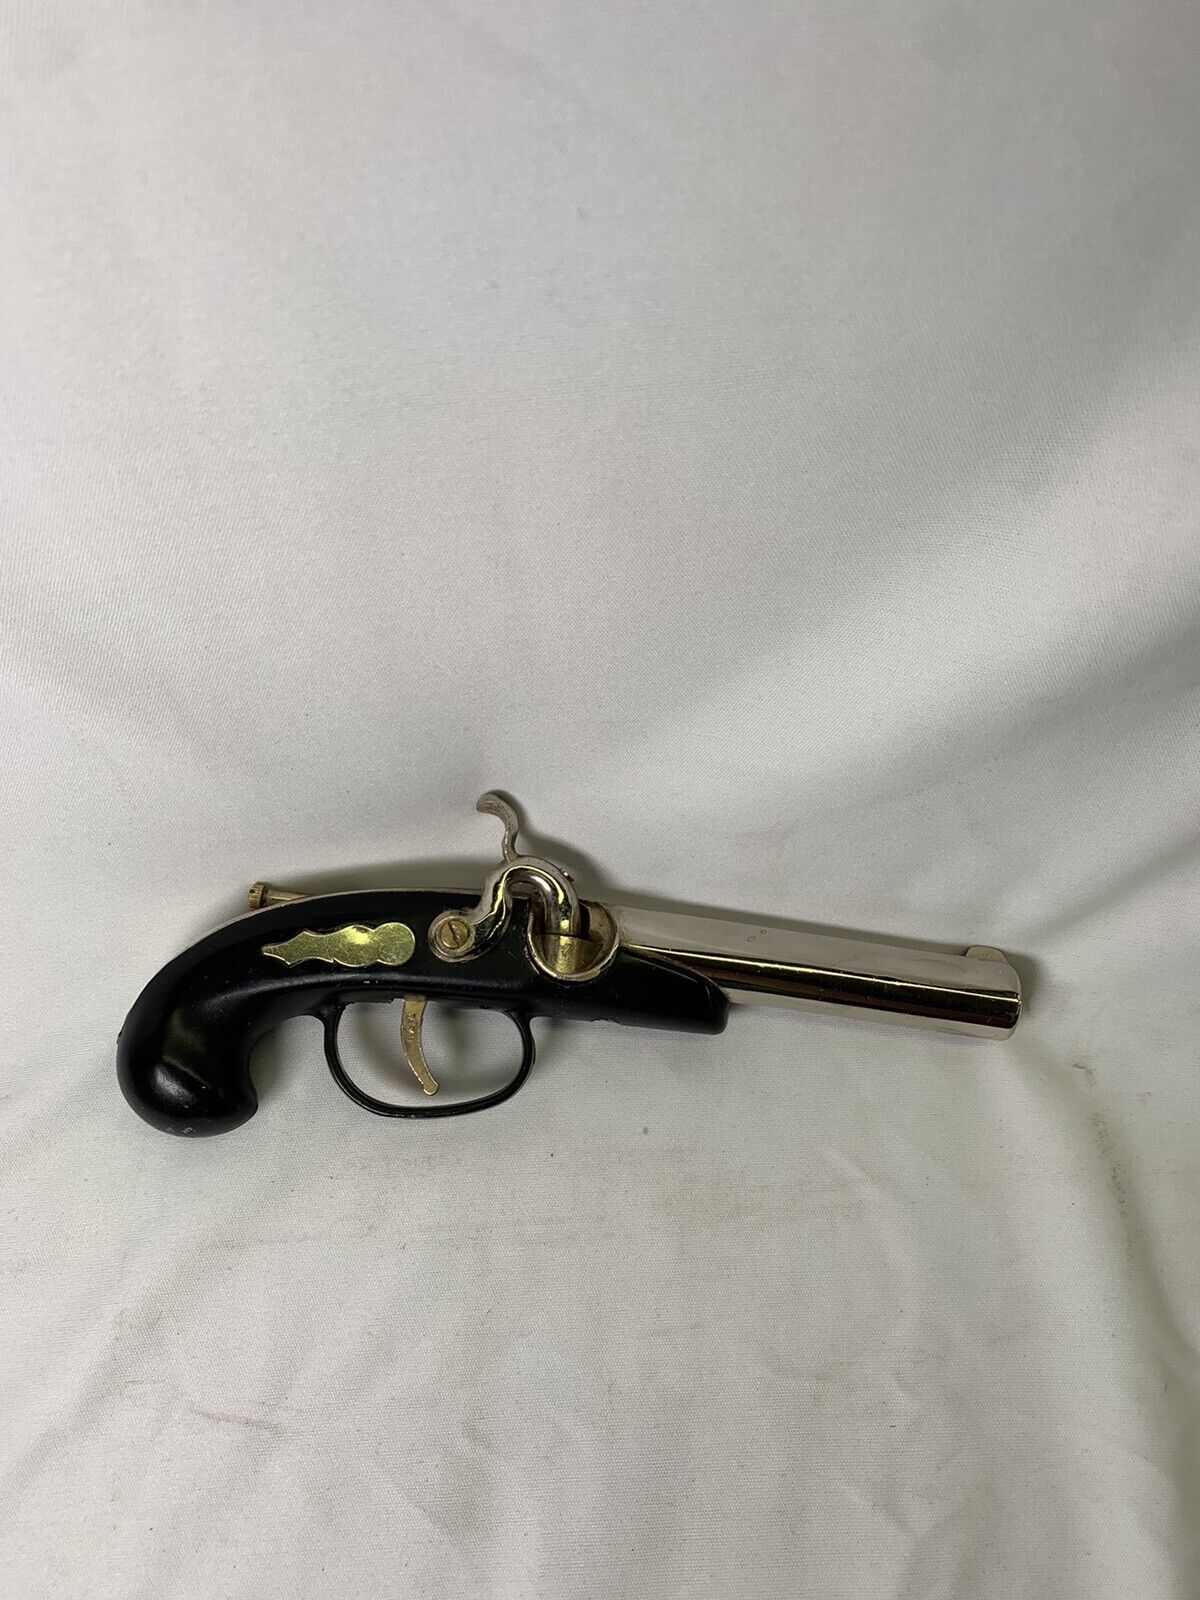 Vintage Black Handle Flintlock Gun Pistol Cigarette Lighter Made in Japan